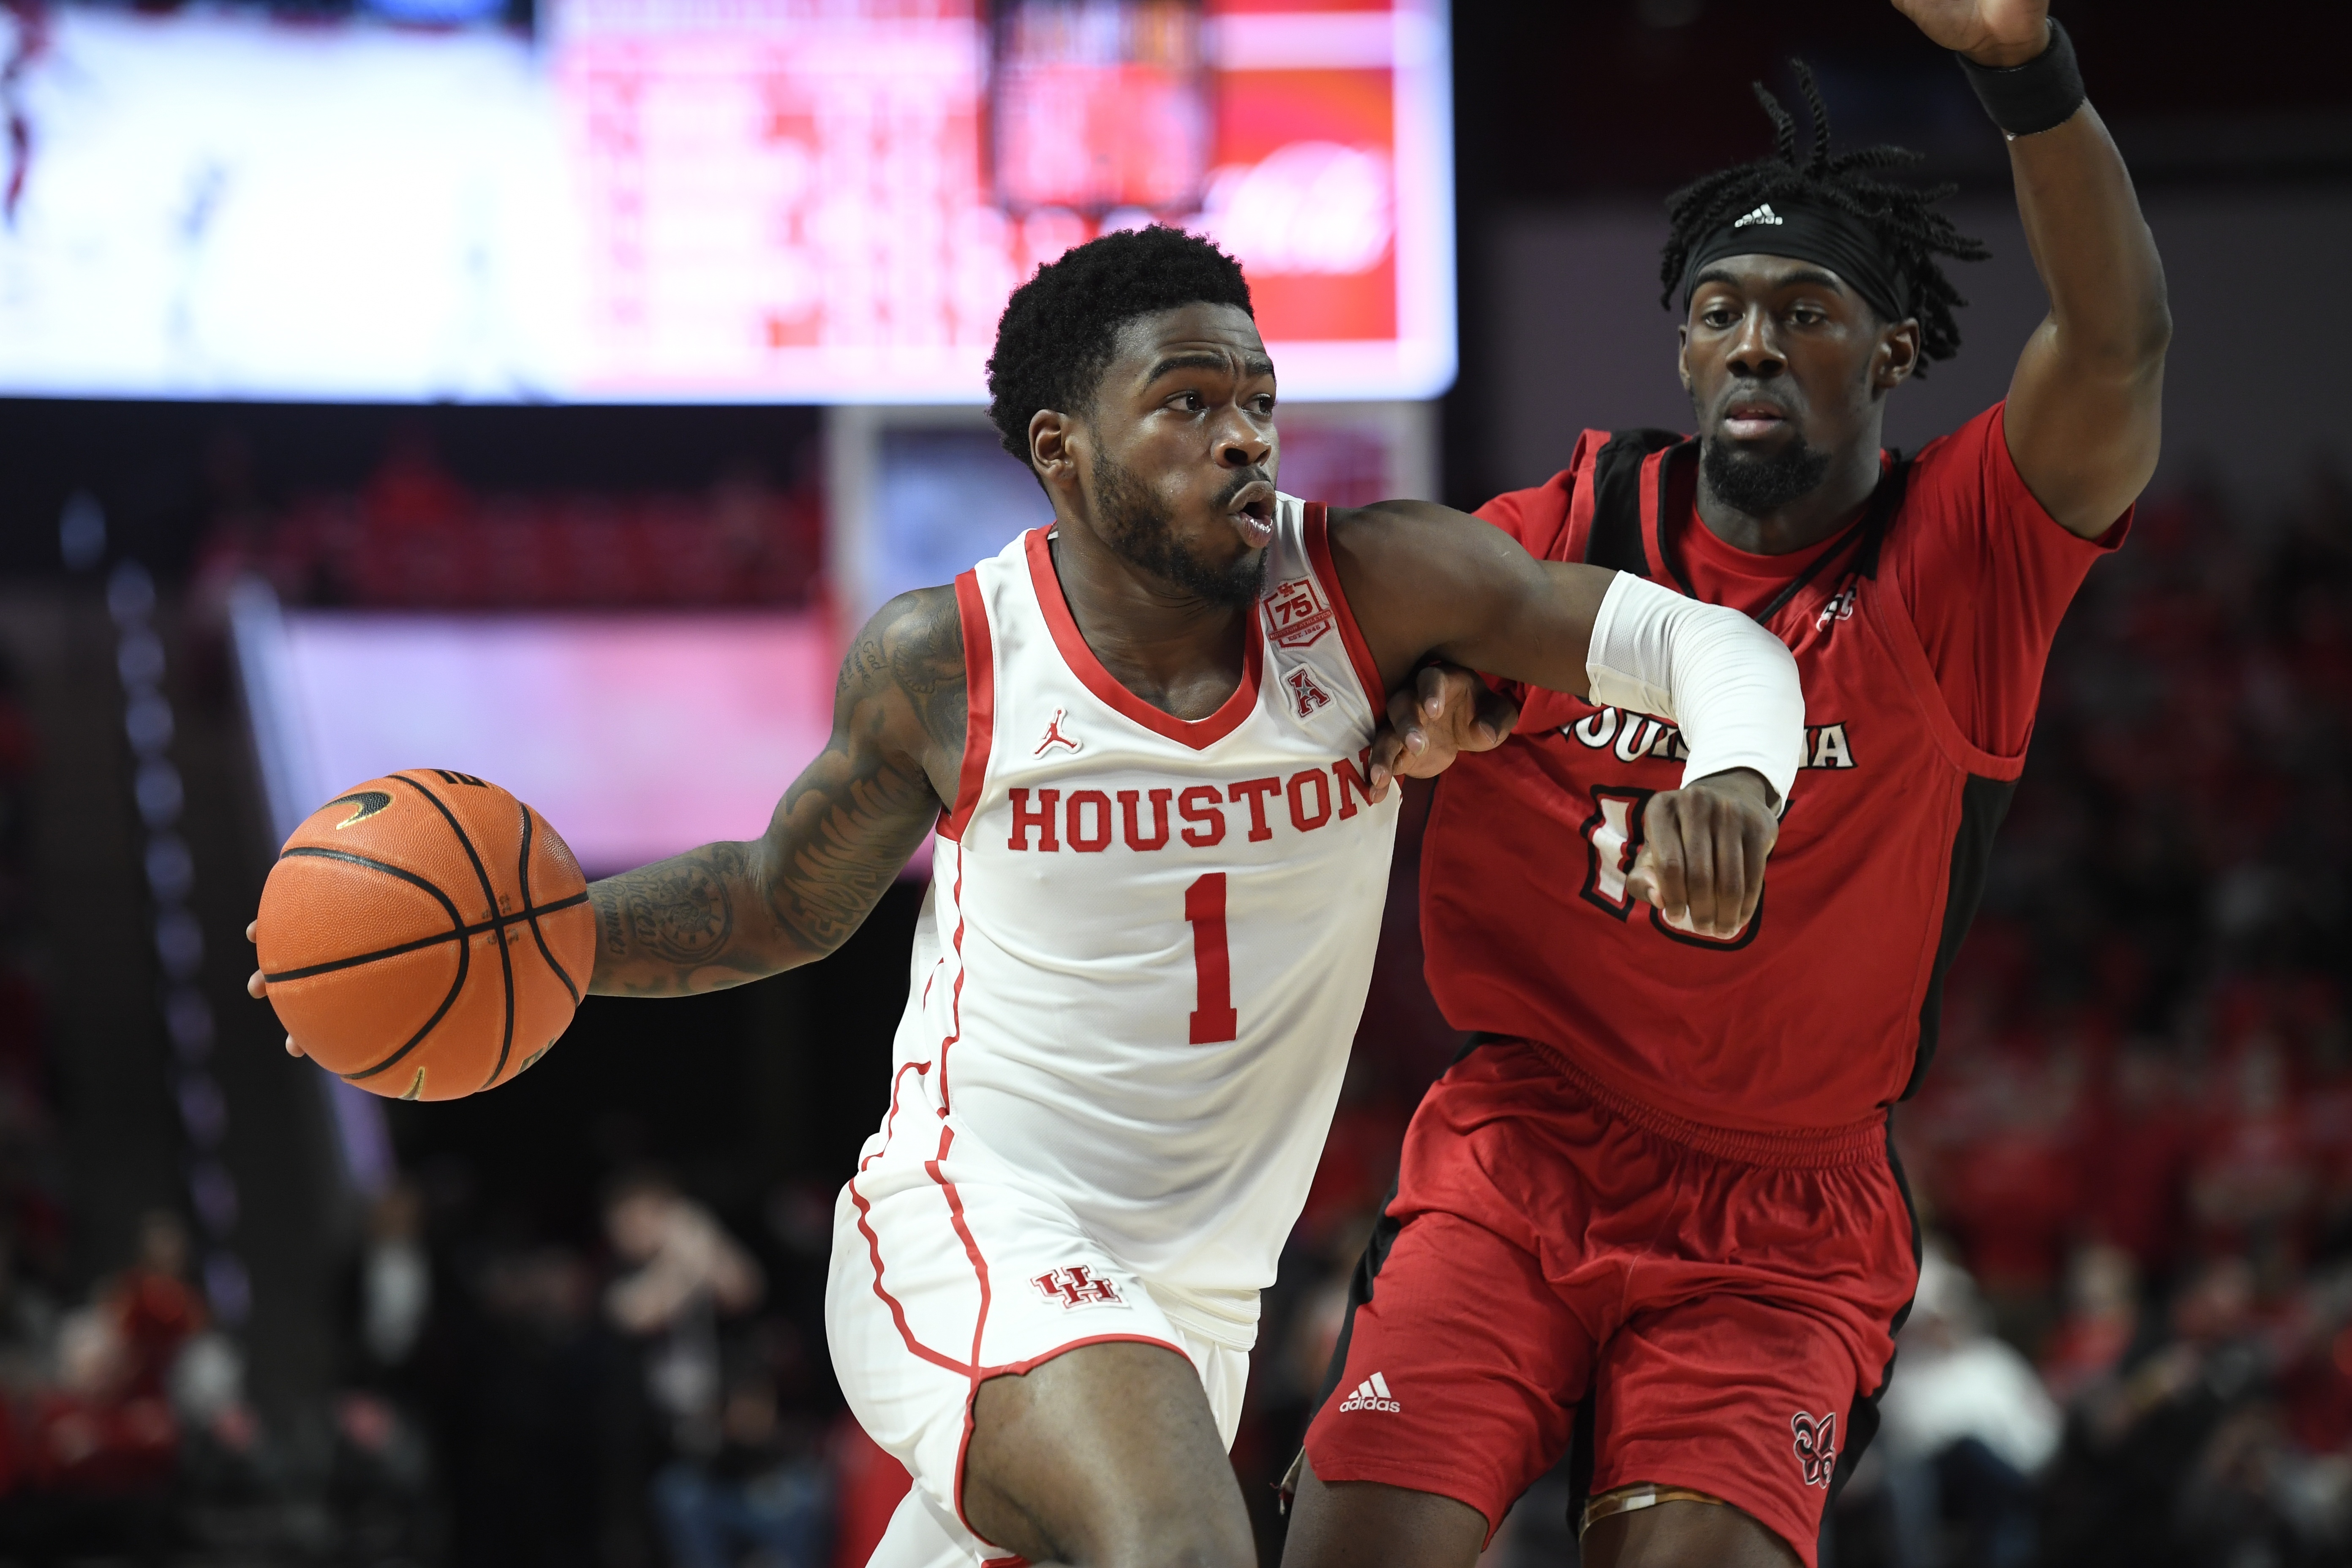 Houston basketball: How Jordan Brand has made Cougars' program cool